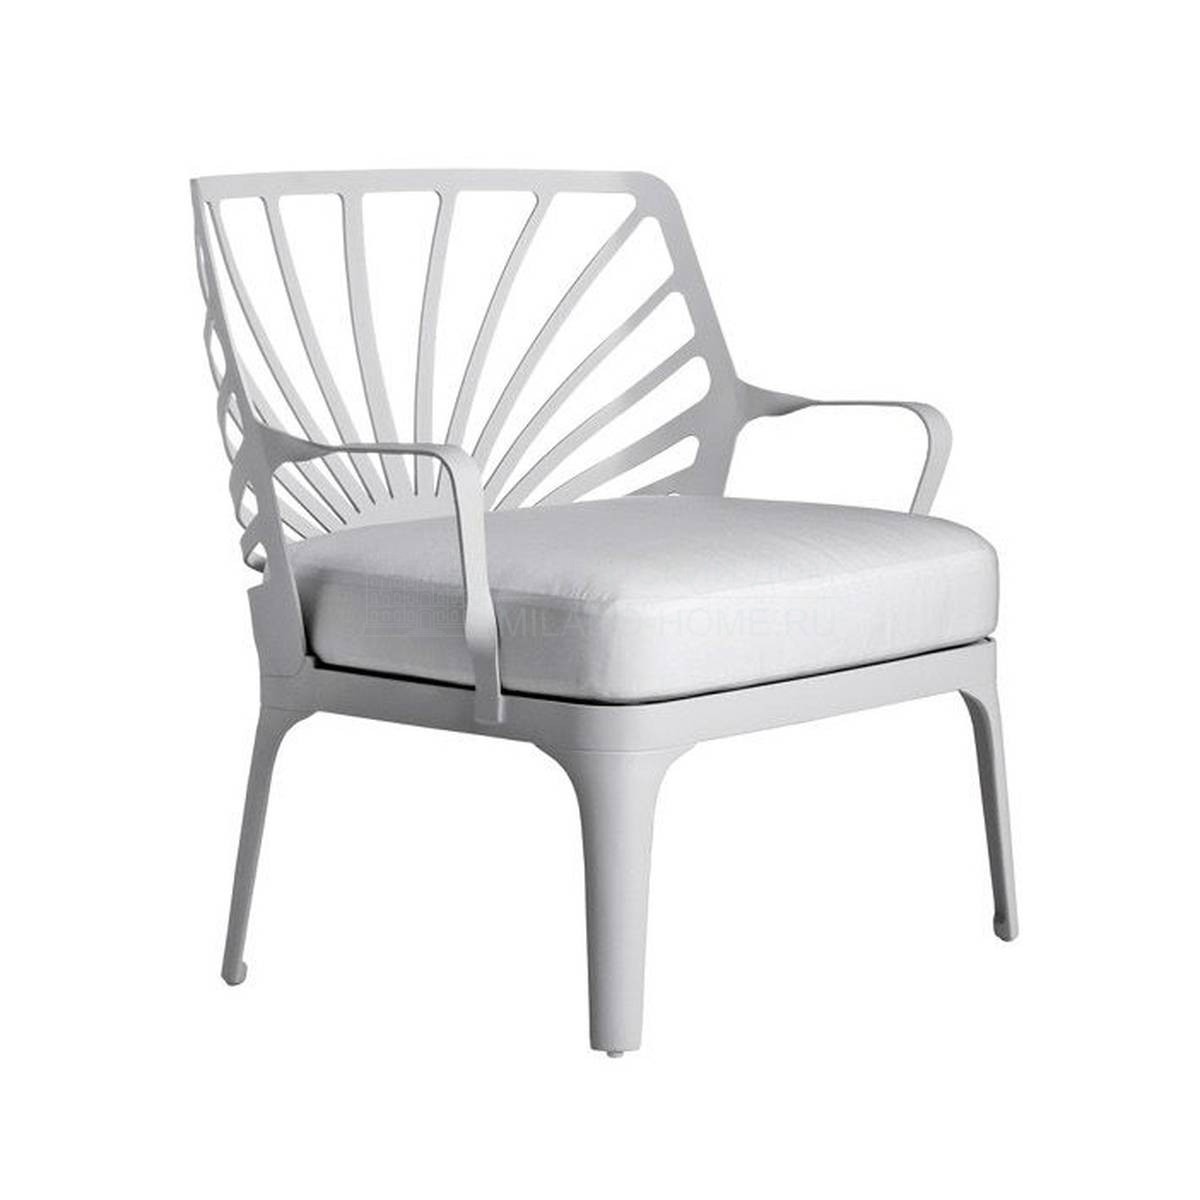 Кресло Sunrice armchair из Италии фабрики DRIADE